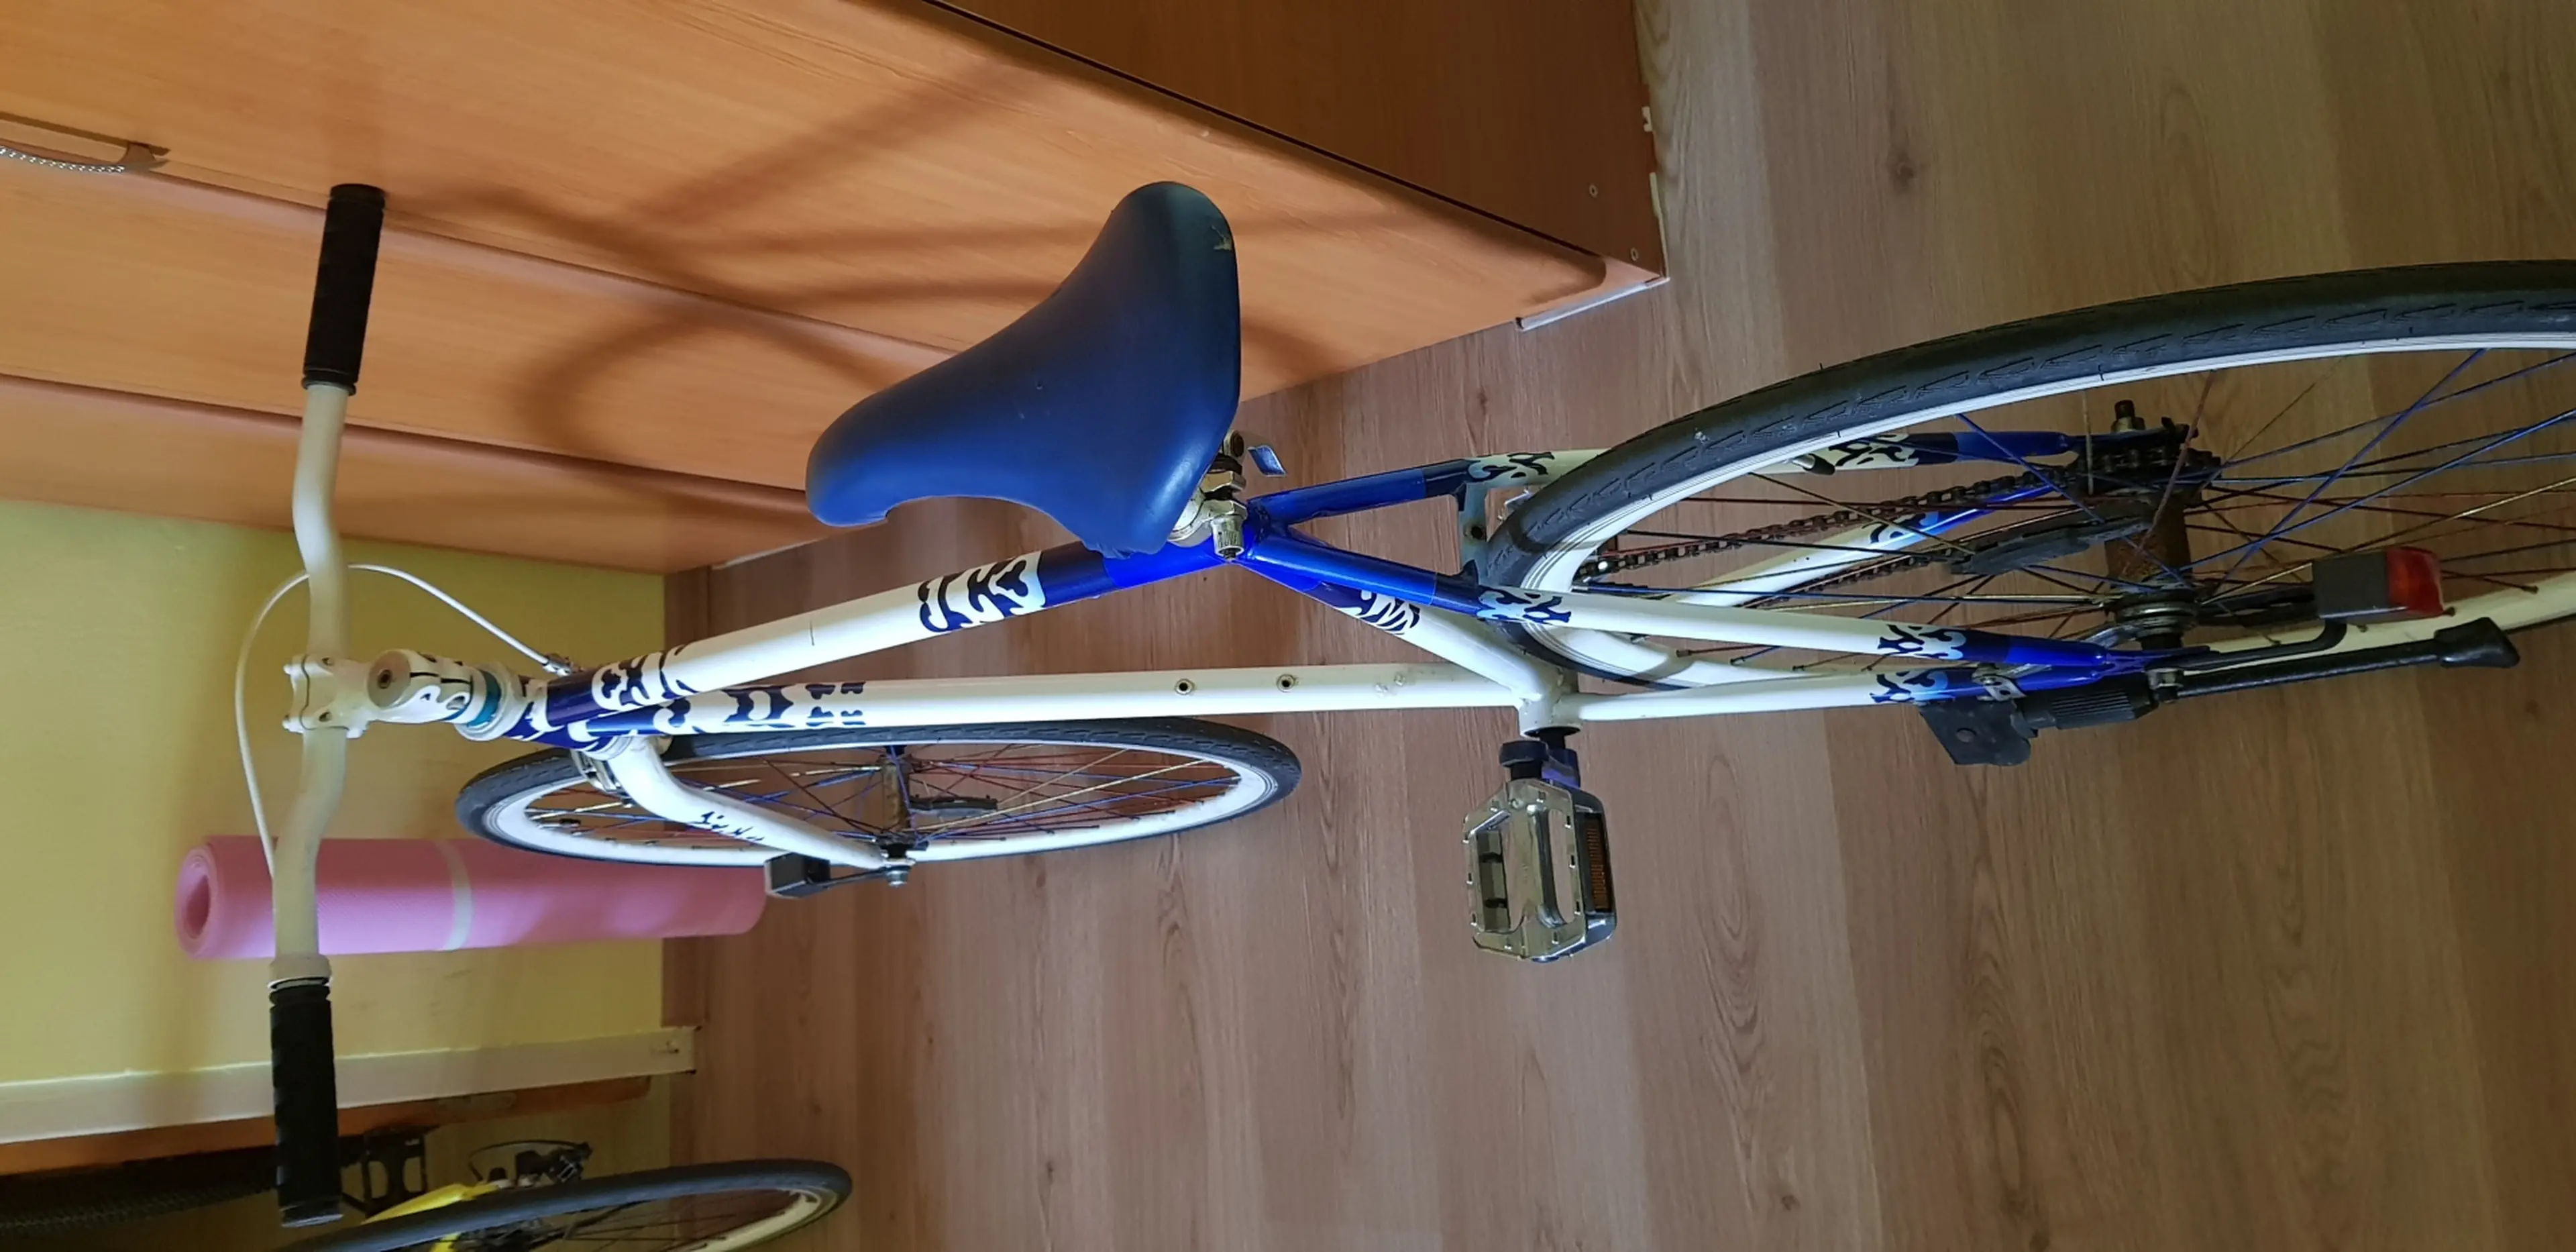 Image Bicicleta fixed gear / fixie cu frana torpedo